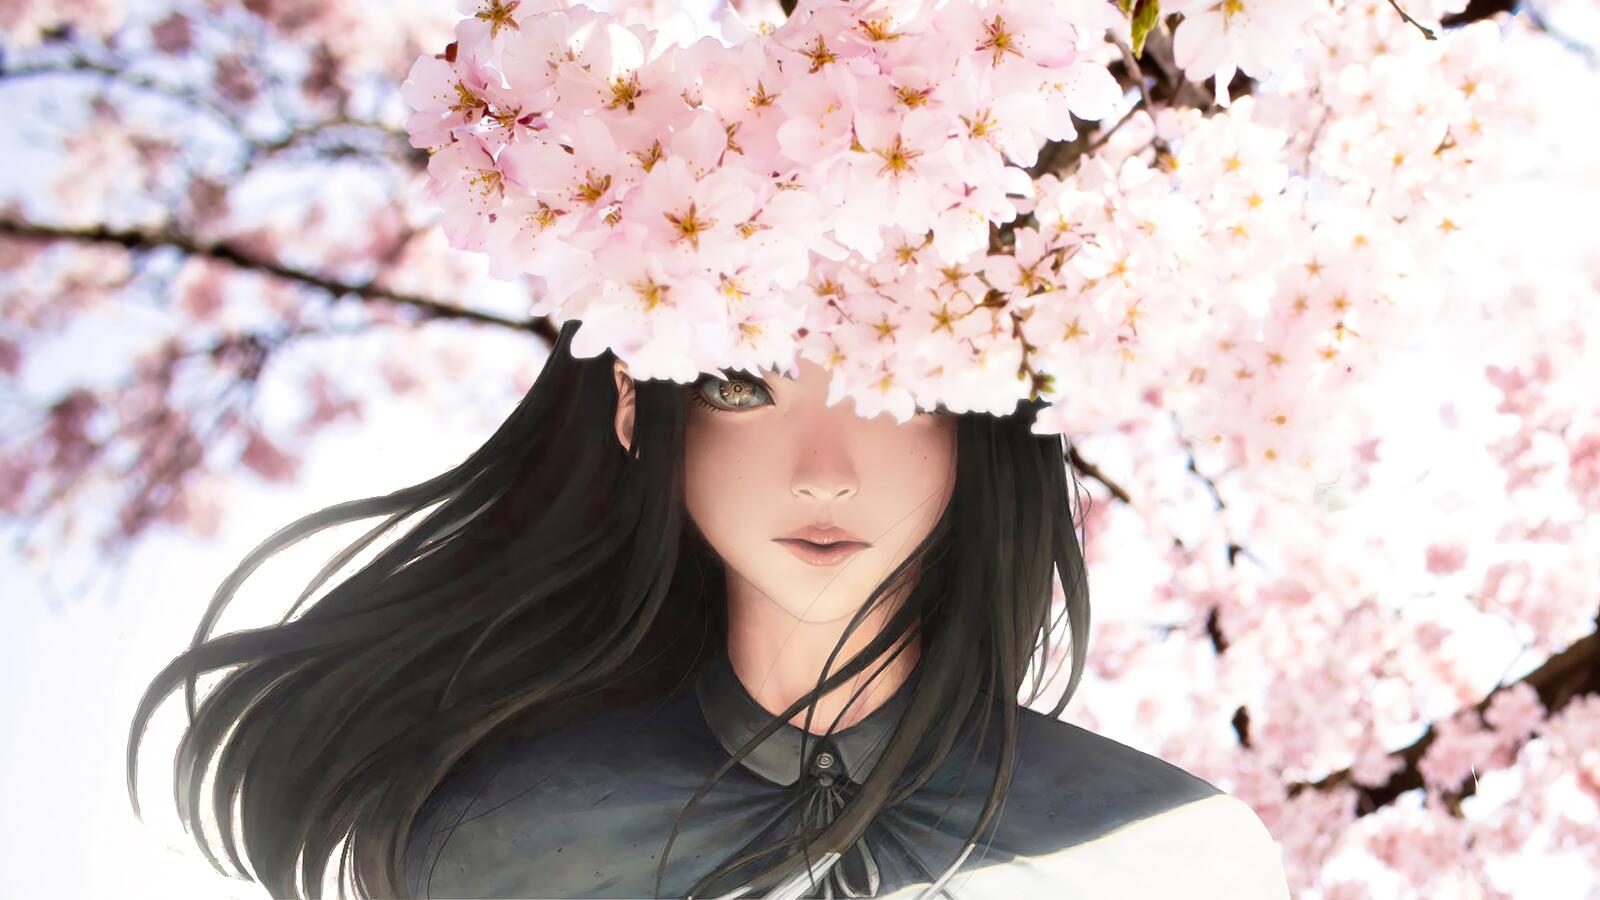 Wallpapers anime girl semi realistic sakura blossom on the desktop